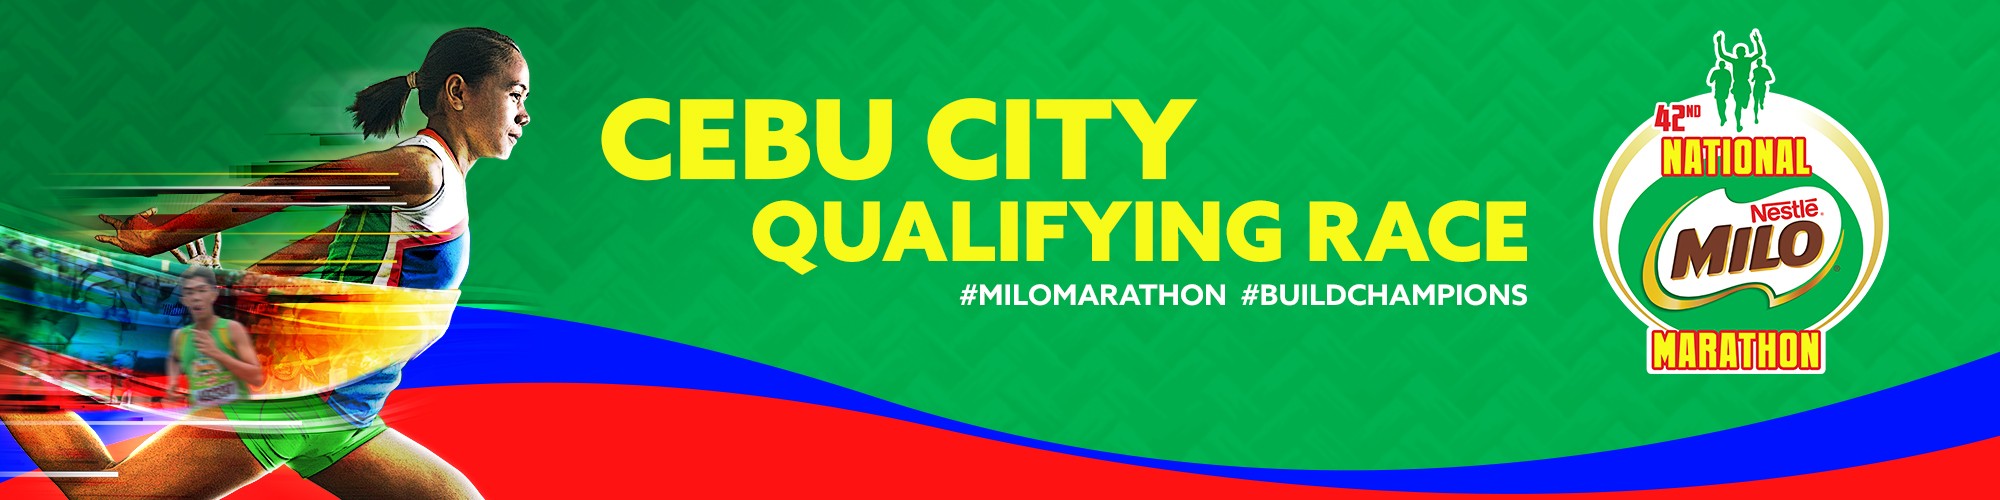 2019 National MILO Marathon Cebu City